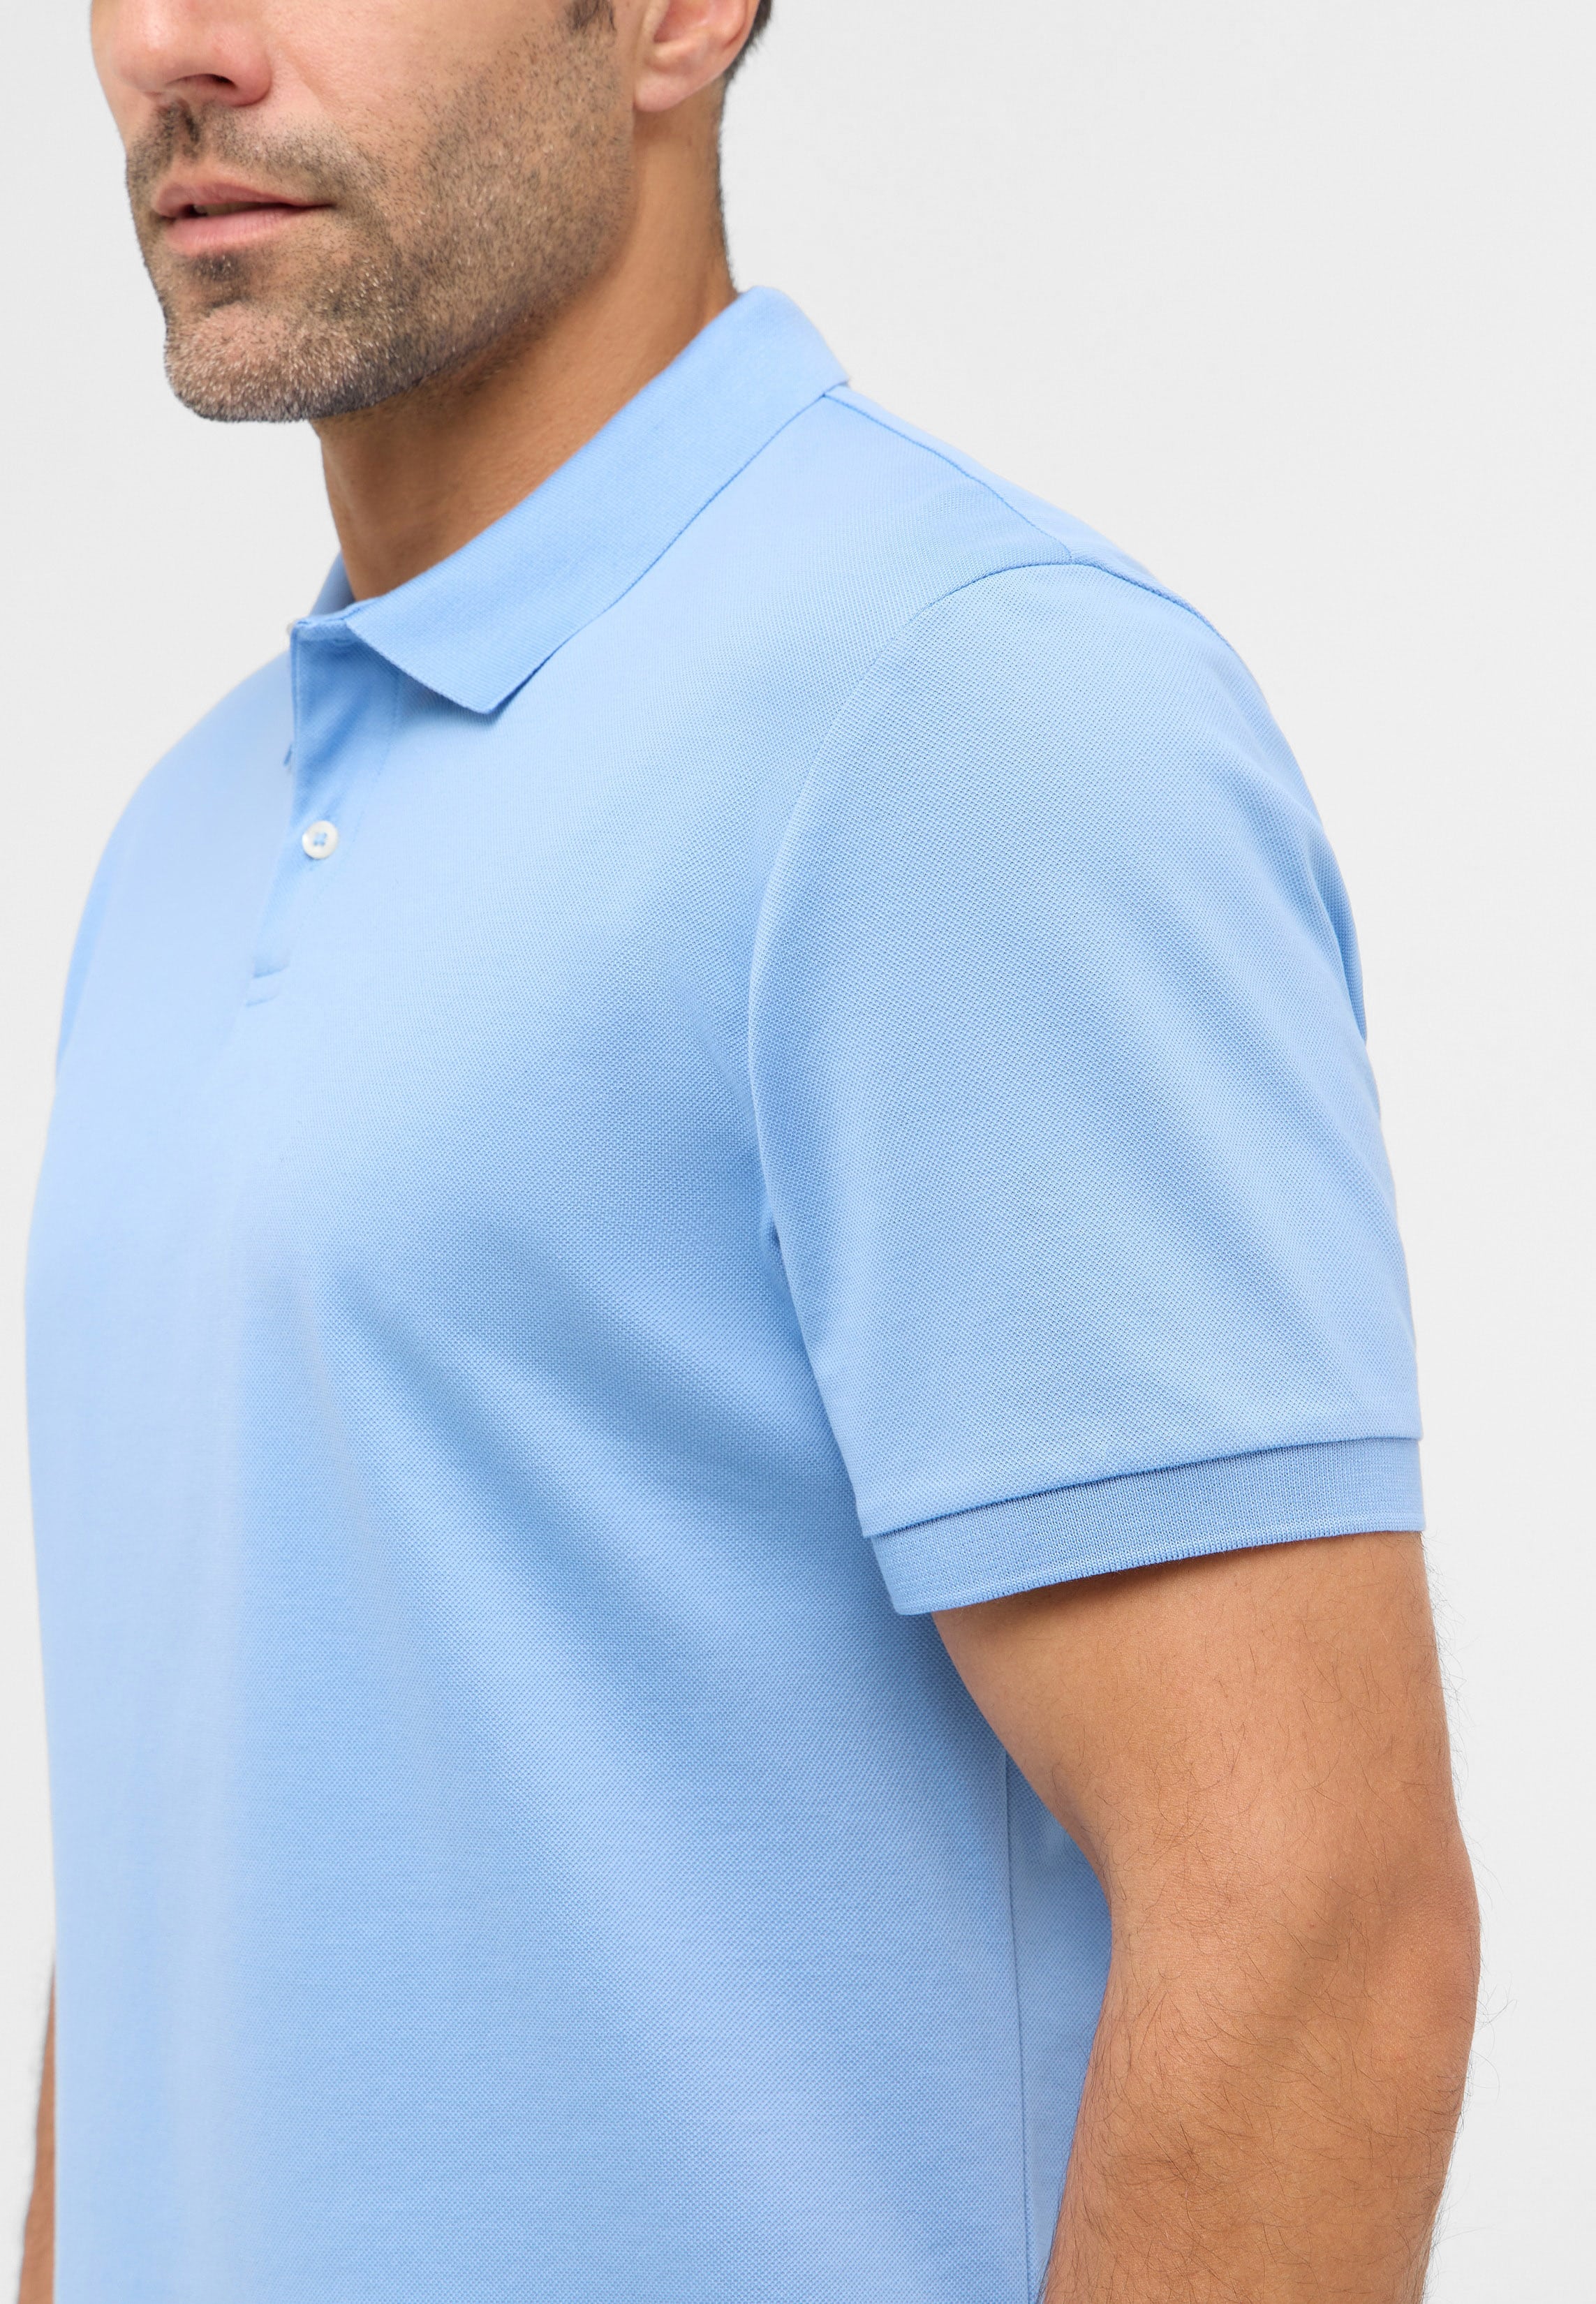 MODERN FIT Polo shirt in sky blue plain